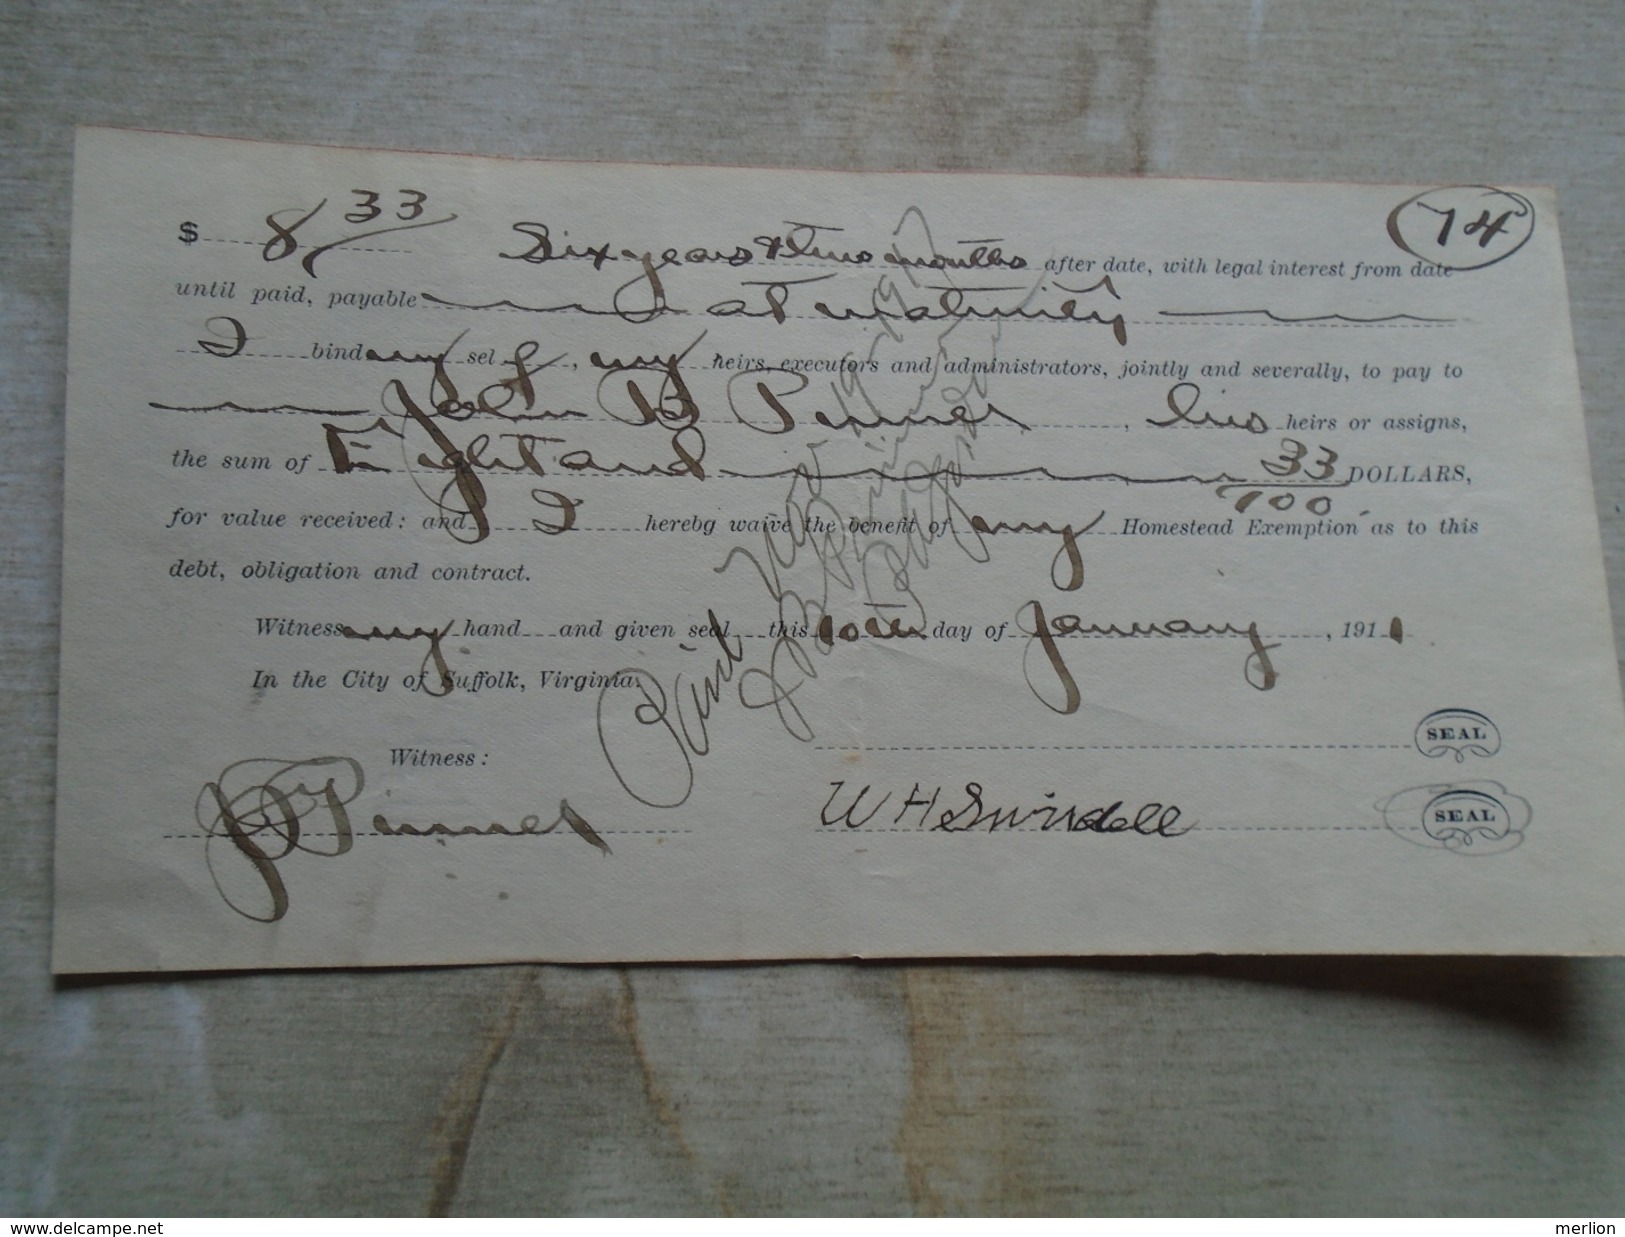 ZA12.4 Suffolk ,Virginia  $8.33  - 1911  Cheque - Cheques & Traveler's Cheques